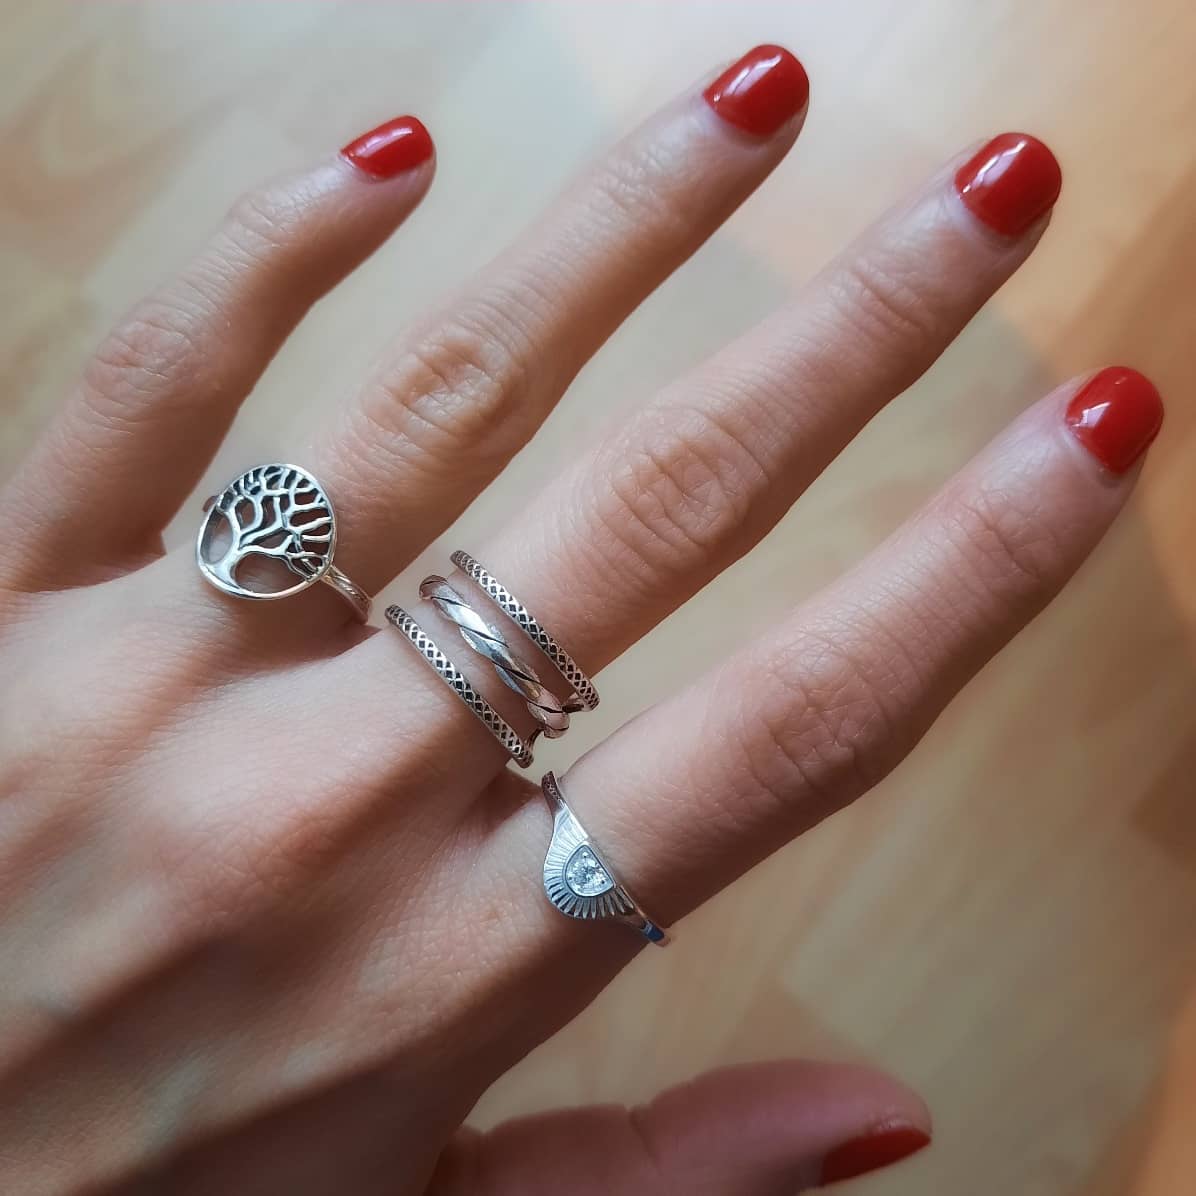 Vintage Ring aus Silber mit 3 Linien Ringe KOOMPLIMENTS